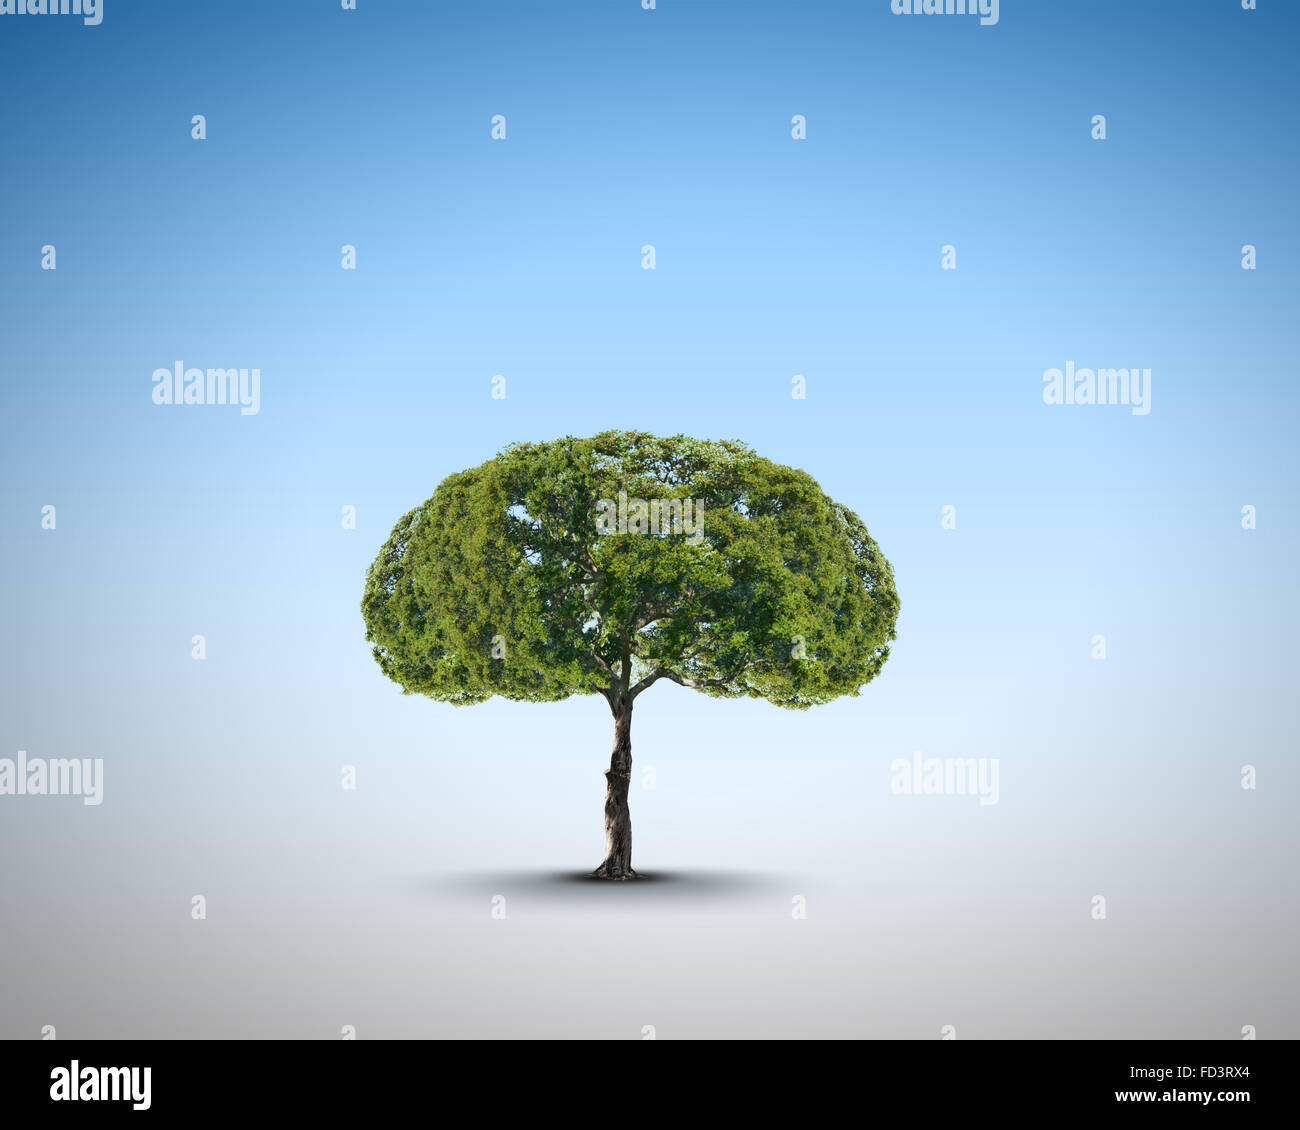 Conceptual image of green tree shaped like brain Stock Photo